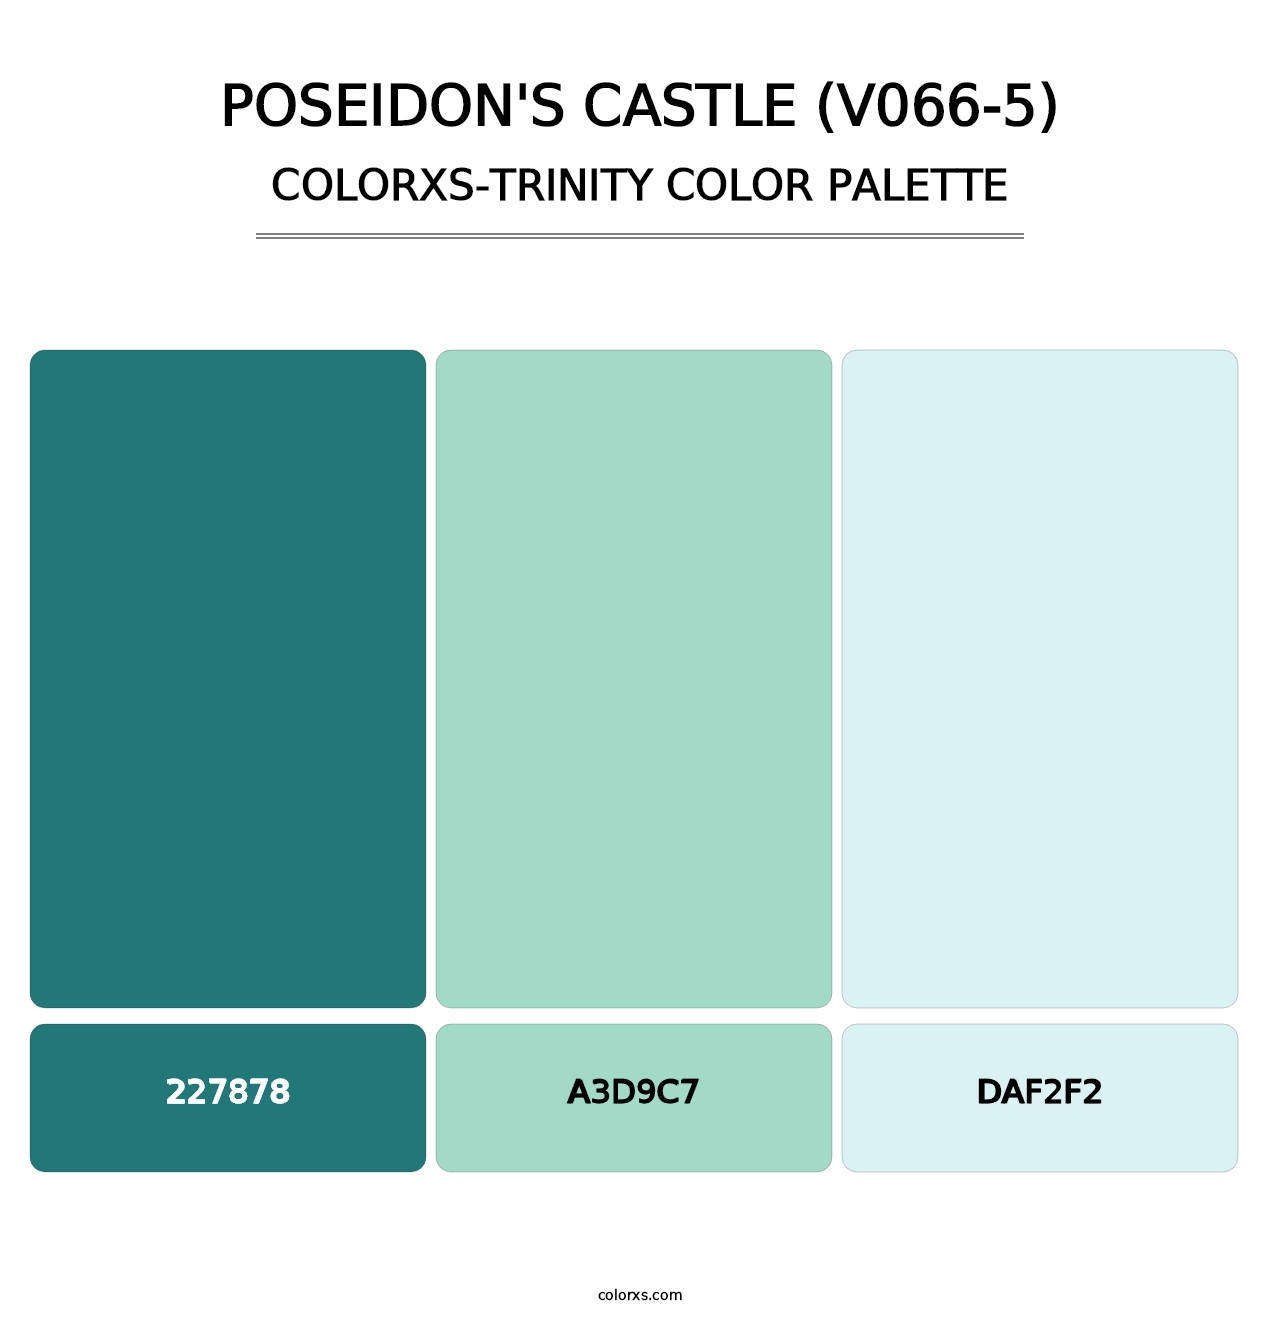 Poseidon's Castle (V066-5) - Colorxs Trinity Palette